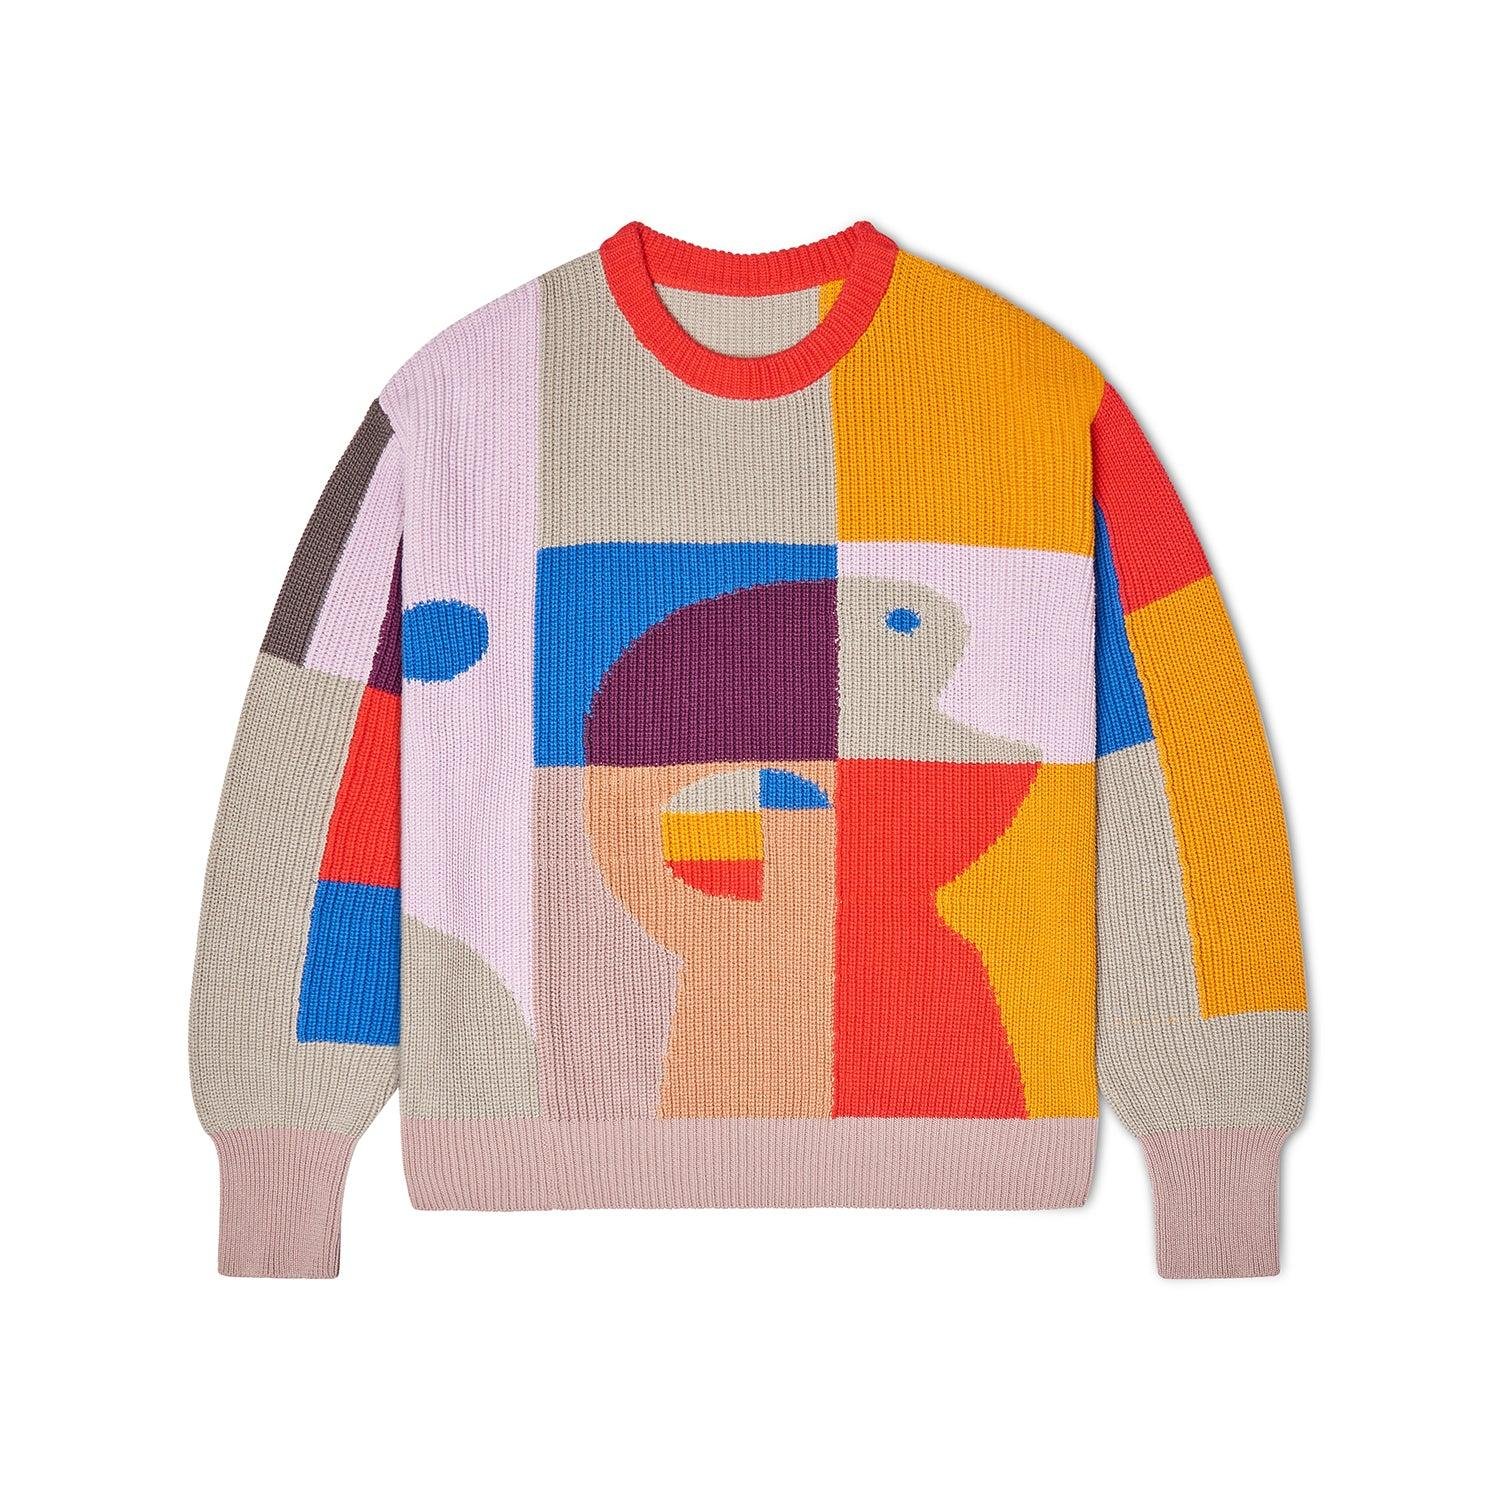 Bauhaus Paint Palette Sweater [Multi] by KIDSUPER STUDIOS